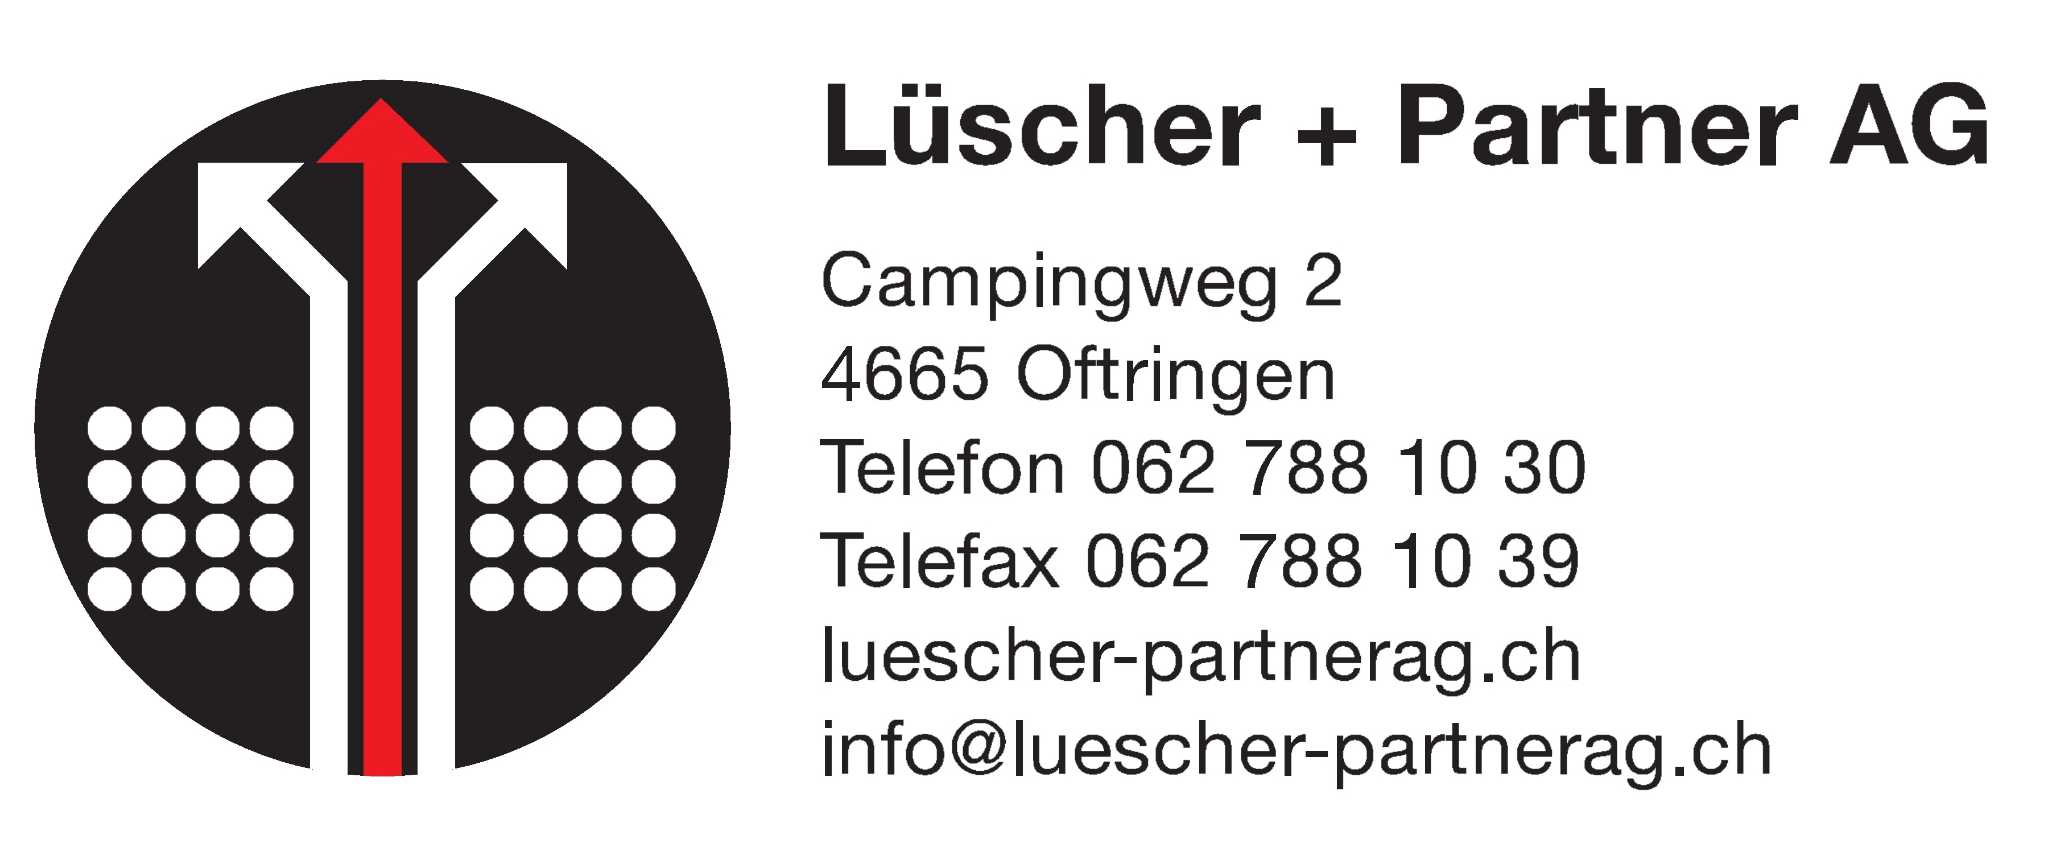 Lüscher + Partner AG